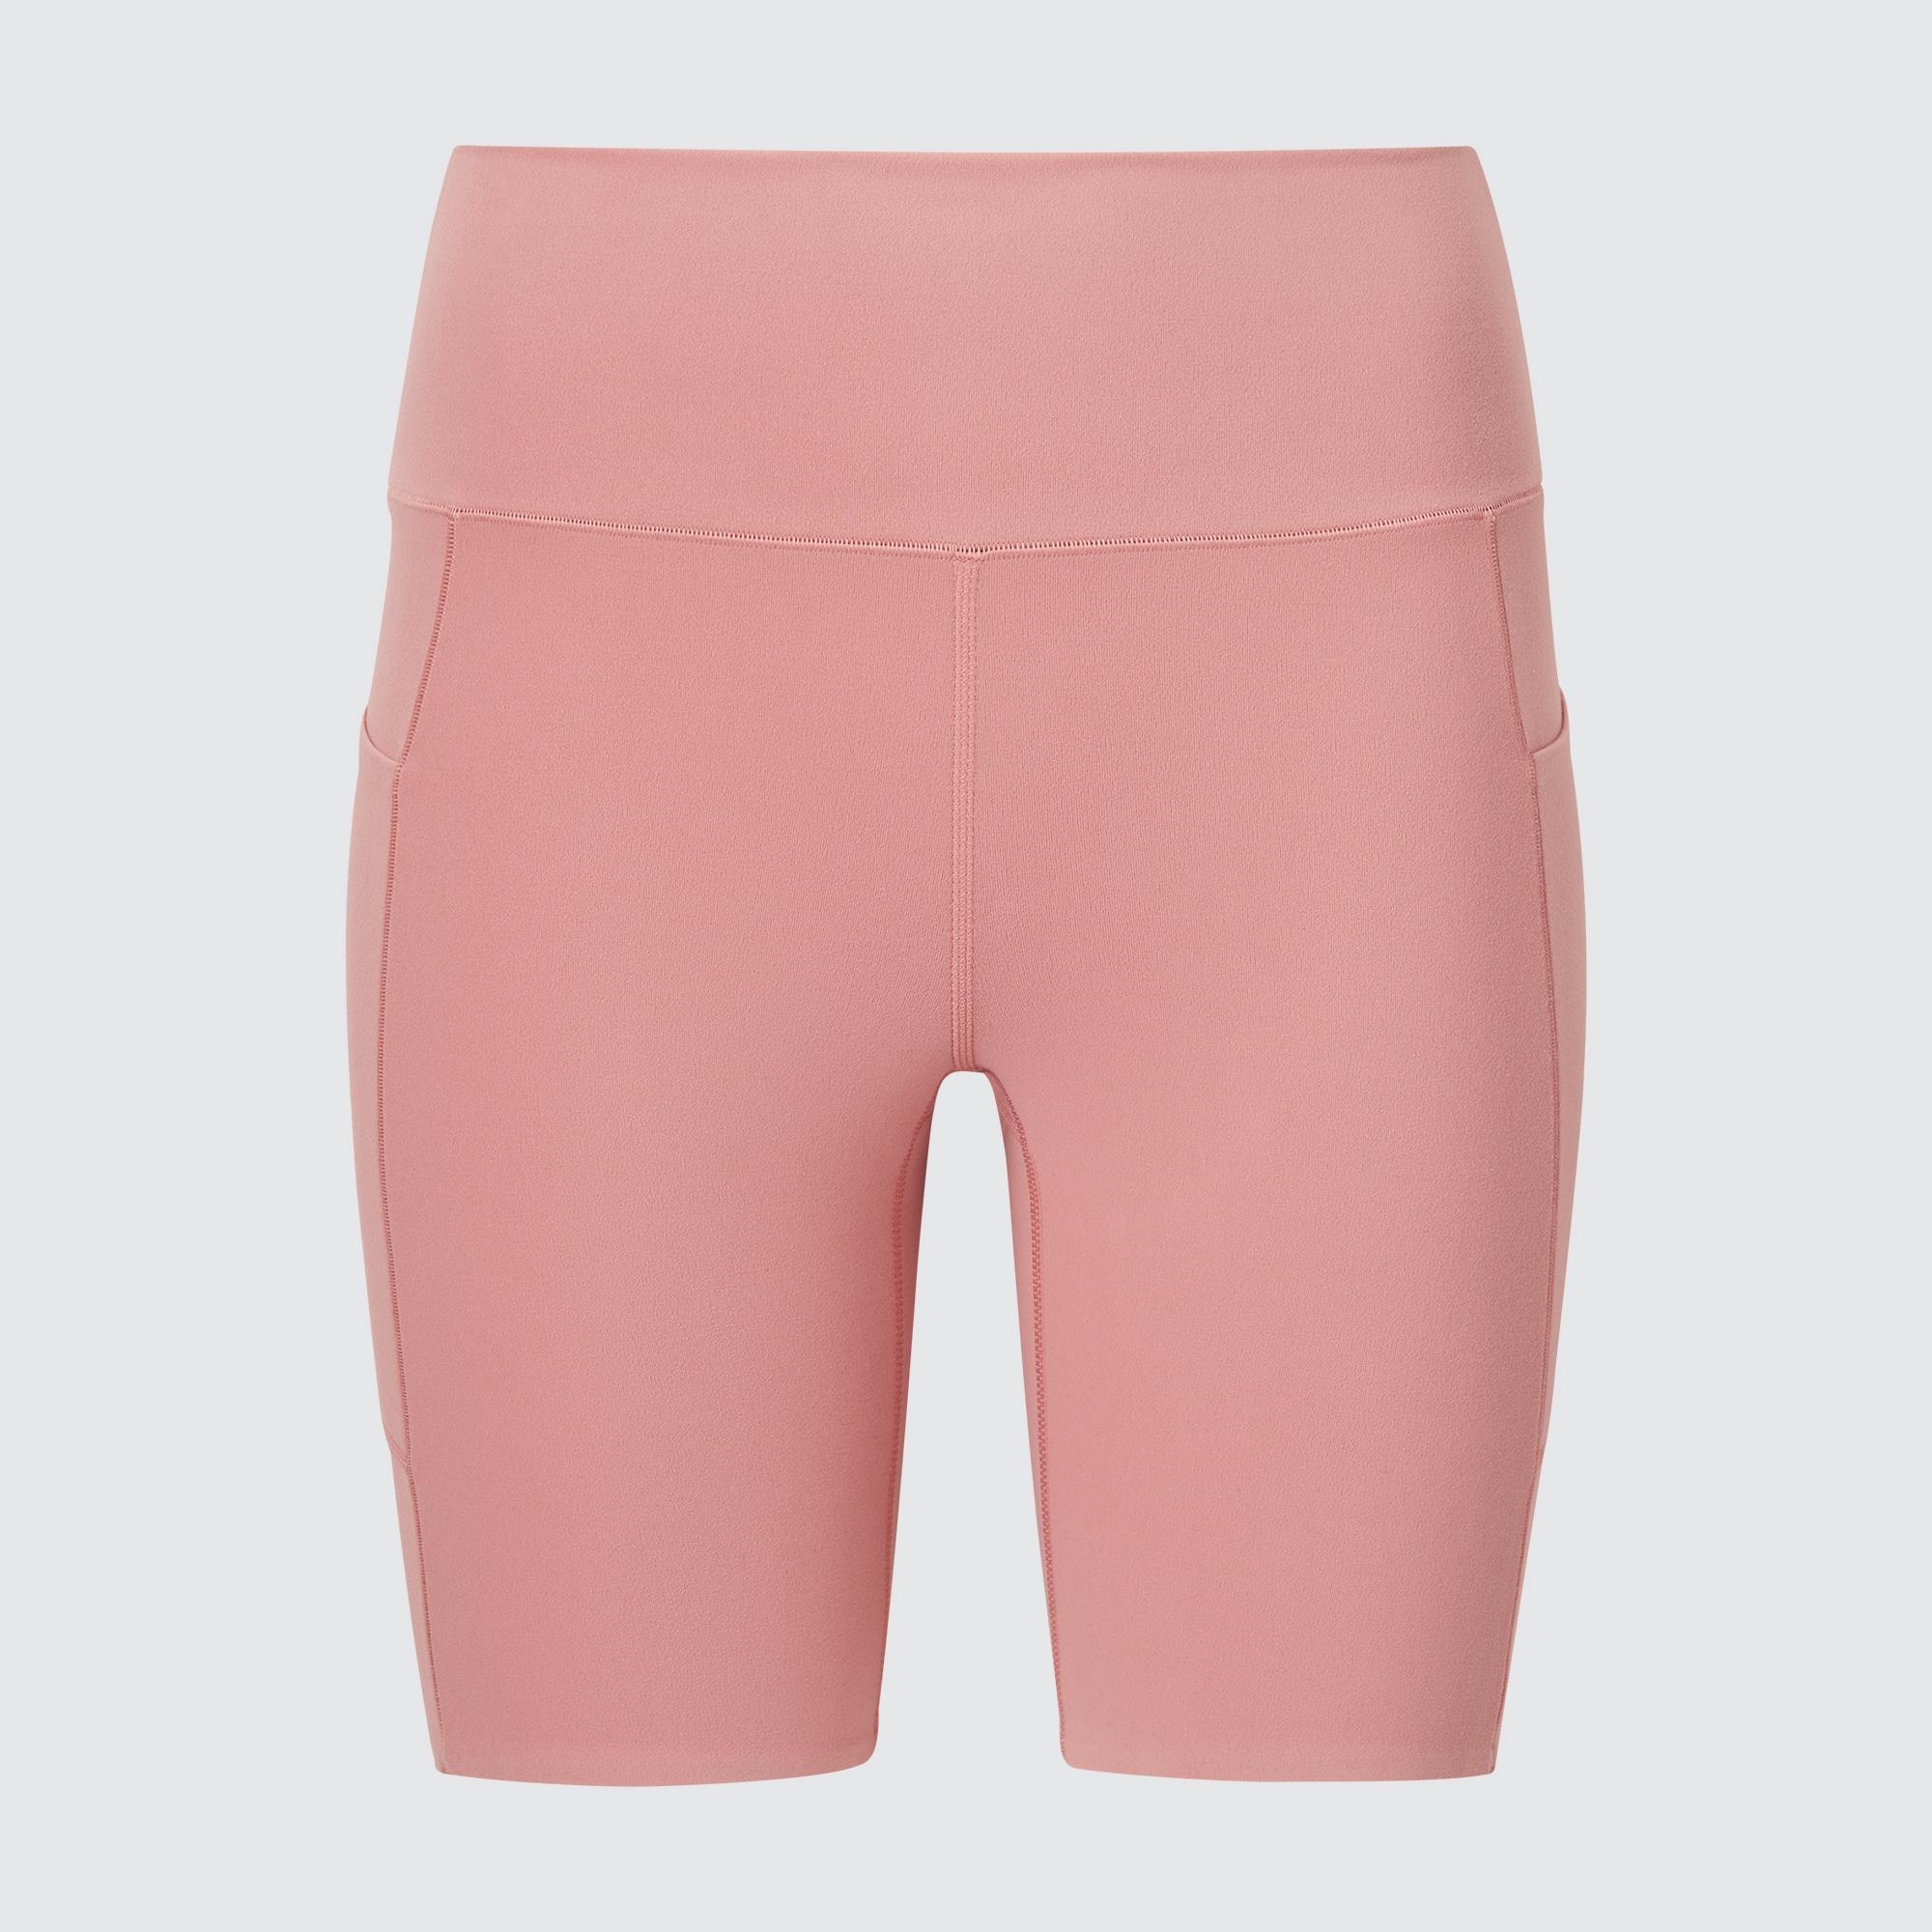 Uniqlo Women's Smart Checked Shorts (online Exclusive)  Smart casual  shorts, Smart shorts, Shorts outfits women